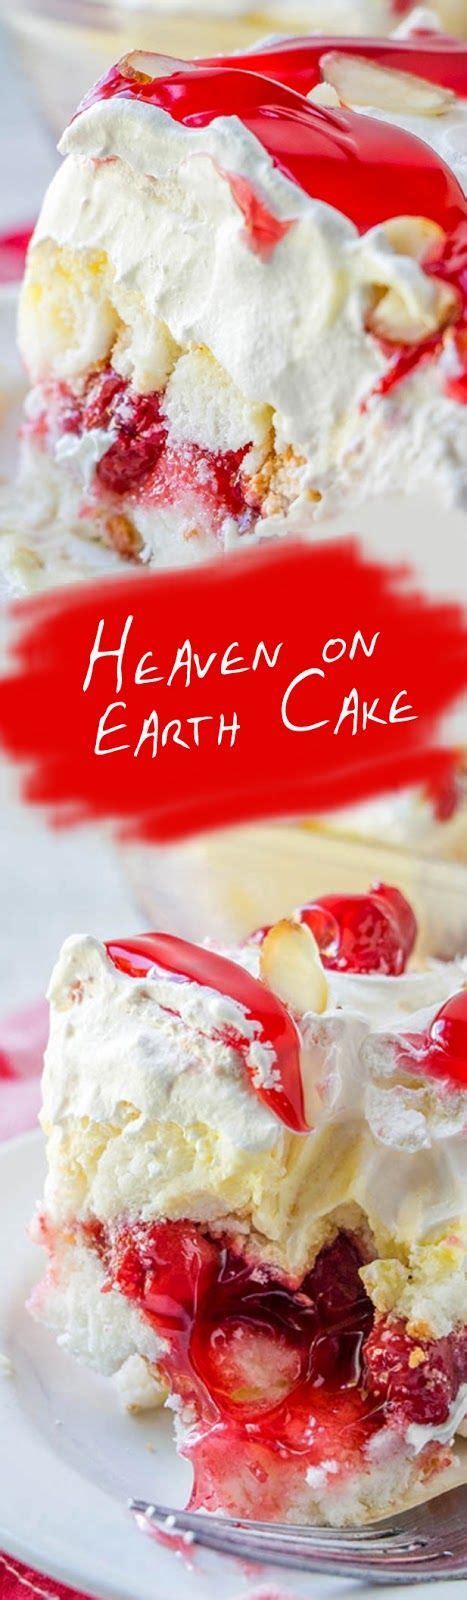 How to make heaven on earth cake. Heaven on Earth Cake #cakesrecipes #recipes #foodrecipes # ...